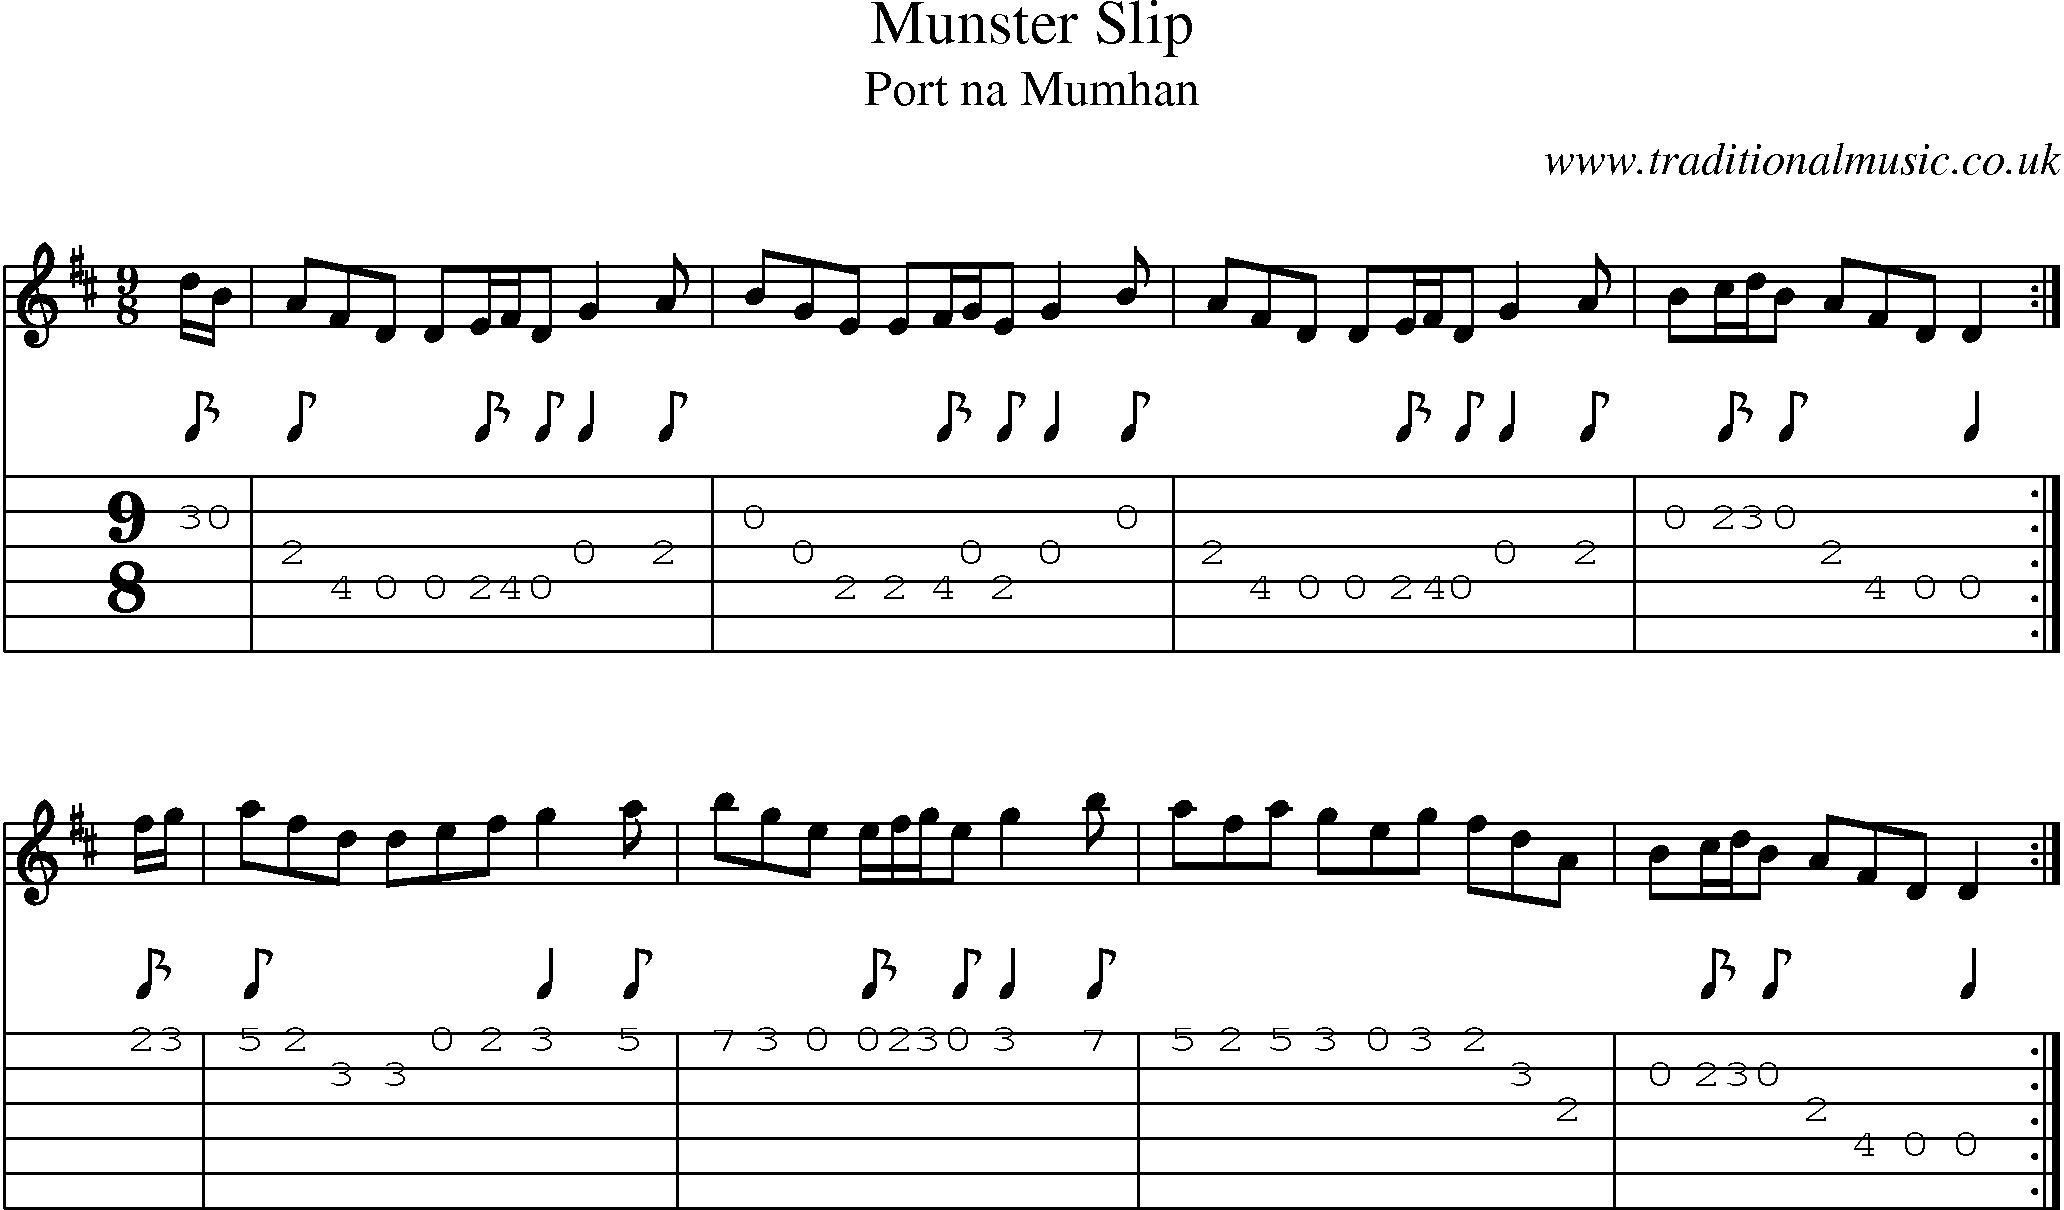 Music Score and Guitar Tabs for Munster Slip